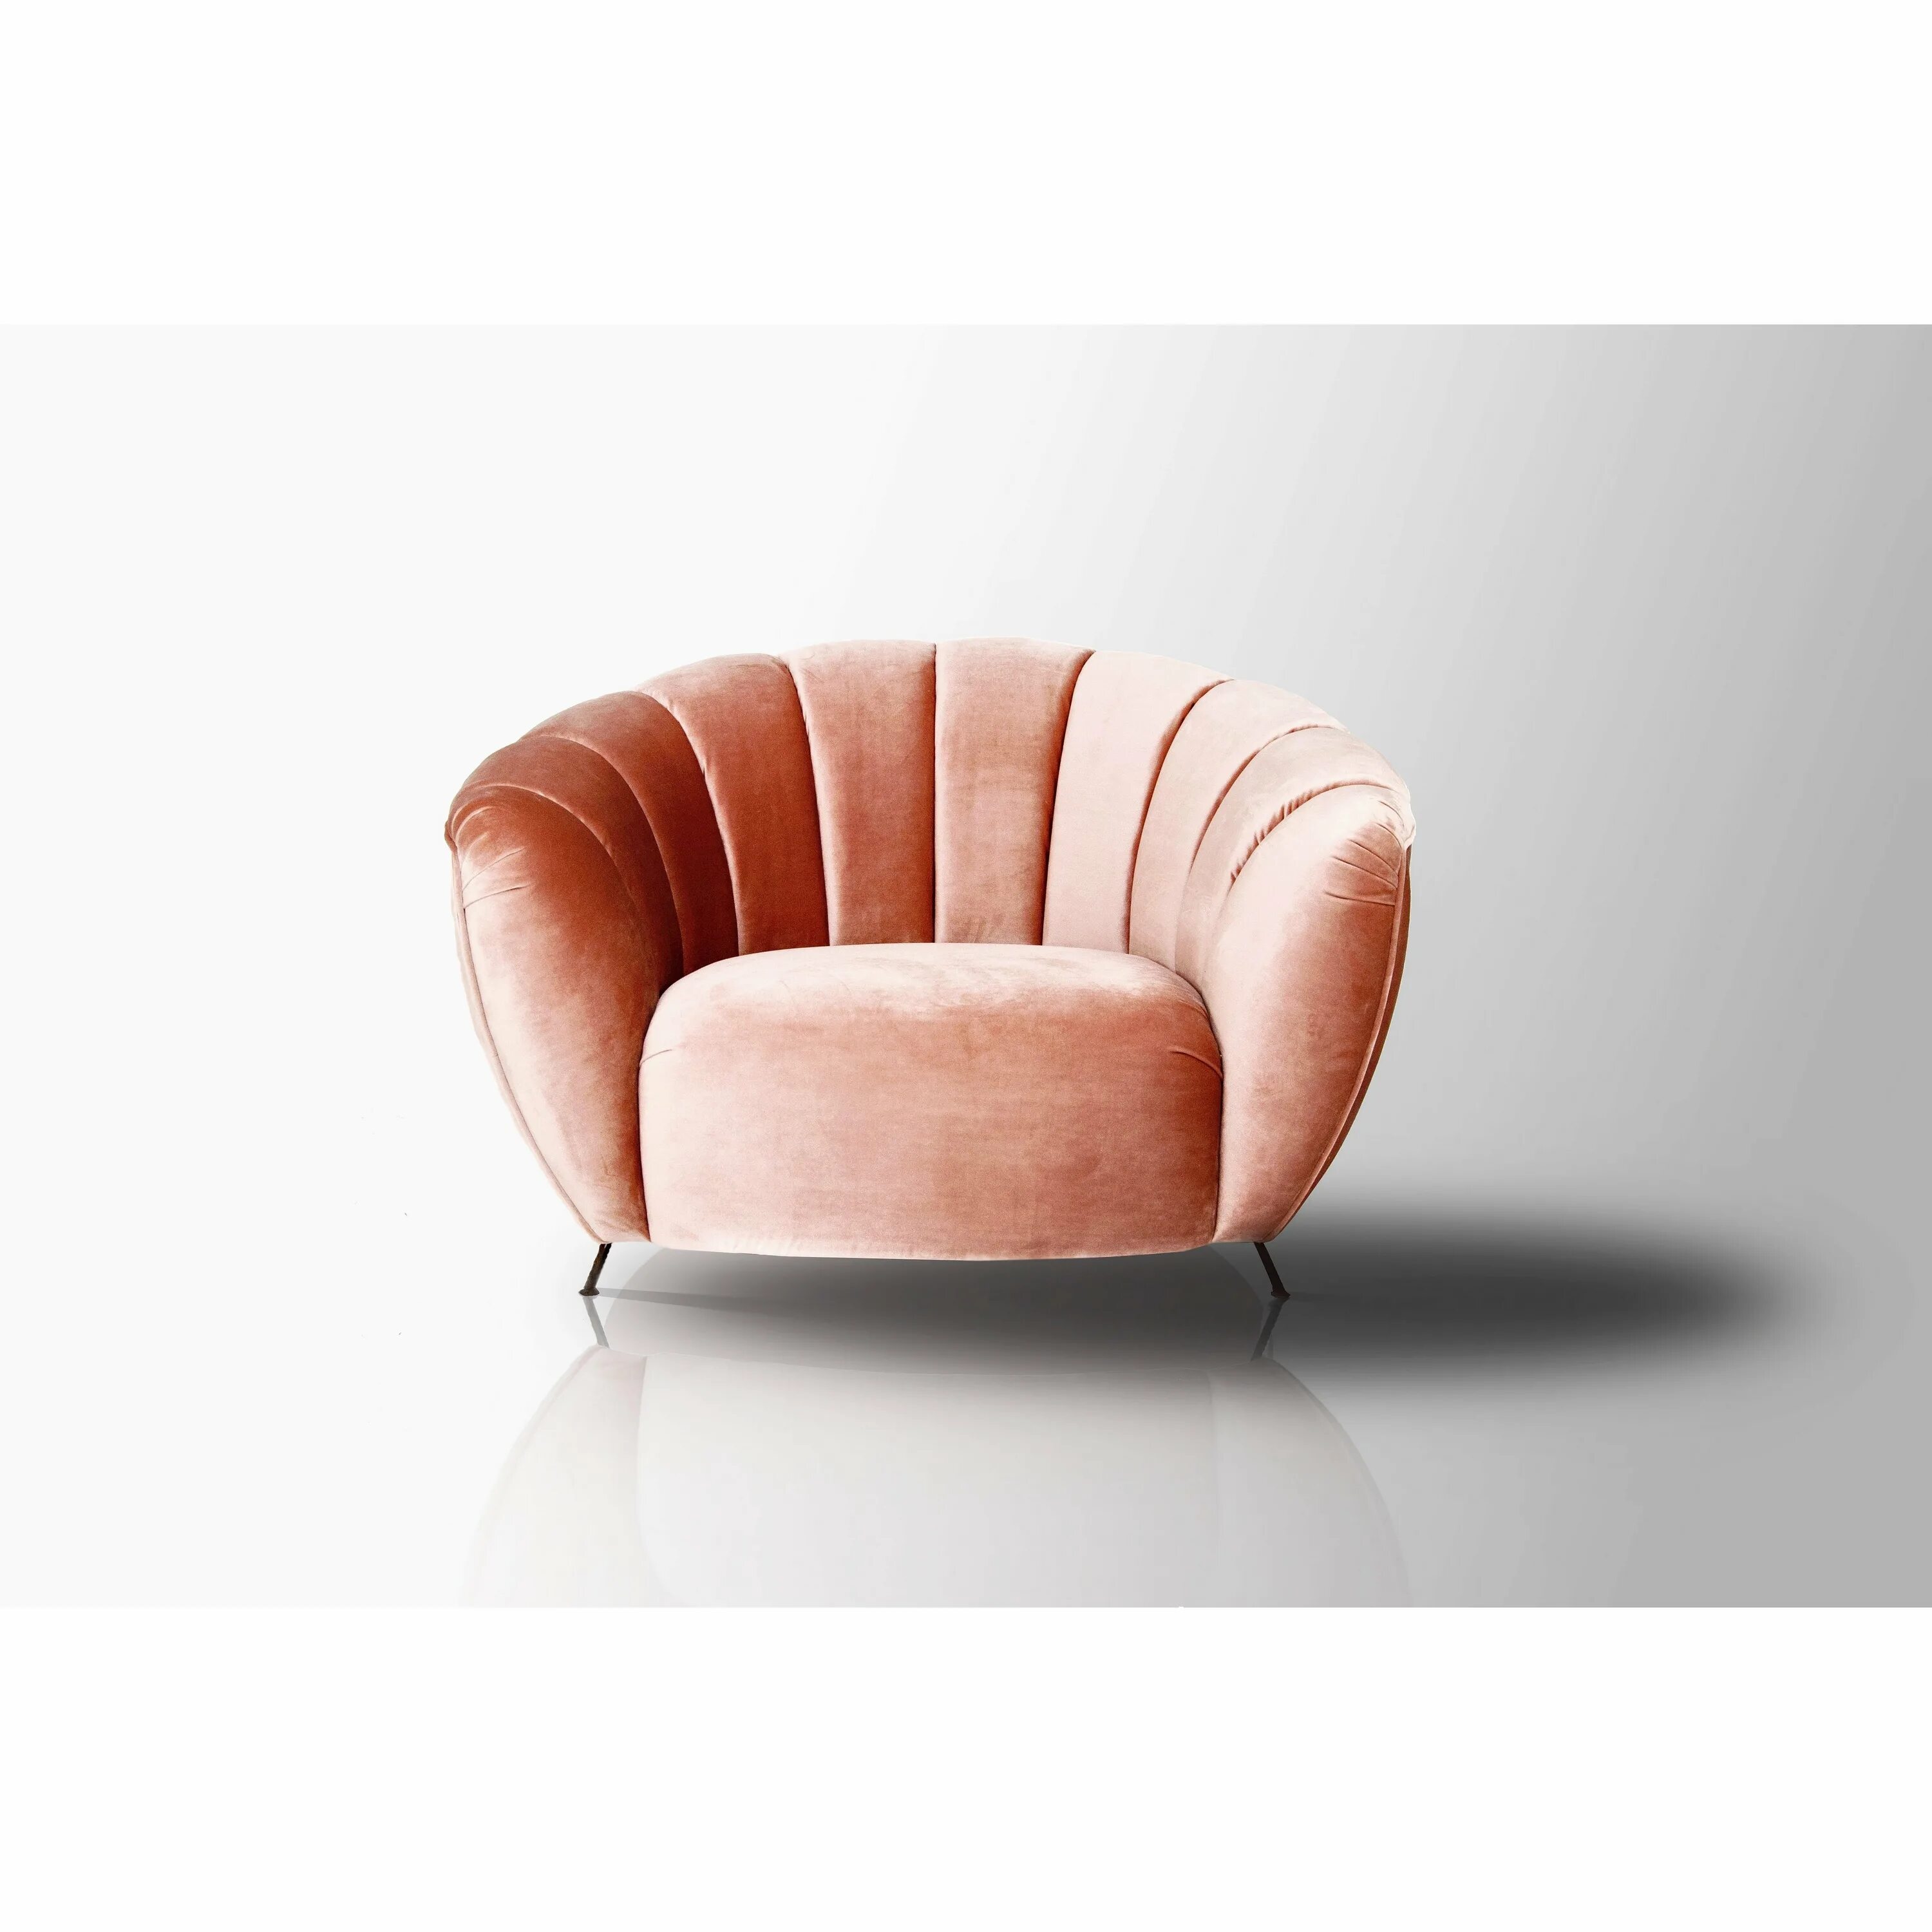 Кресло мягкое Miji артикул: IMR-1414989. Красивое кресло. Модные кресла. Стильное кресло. Производители мягких кресел